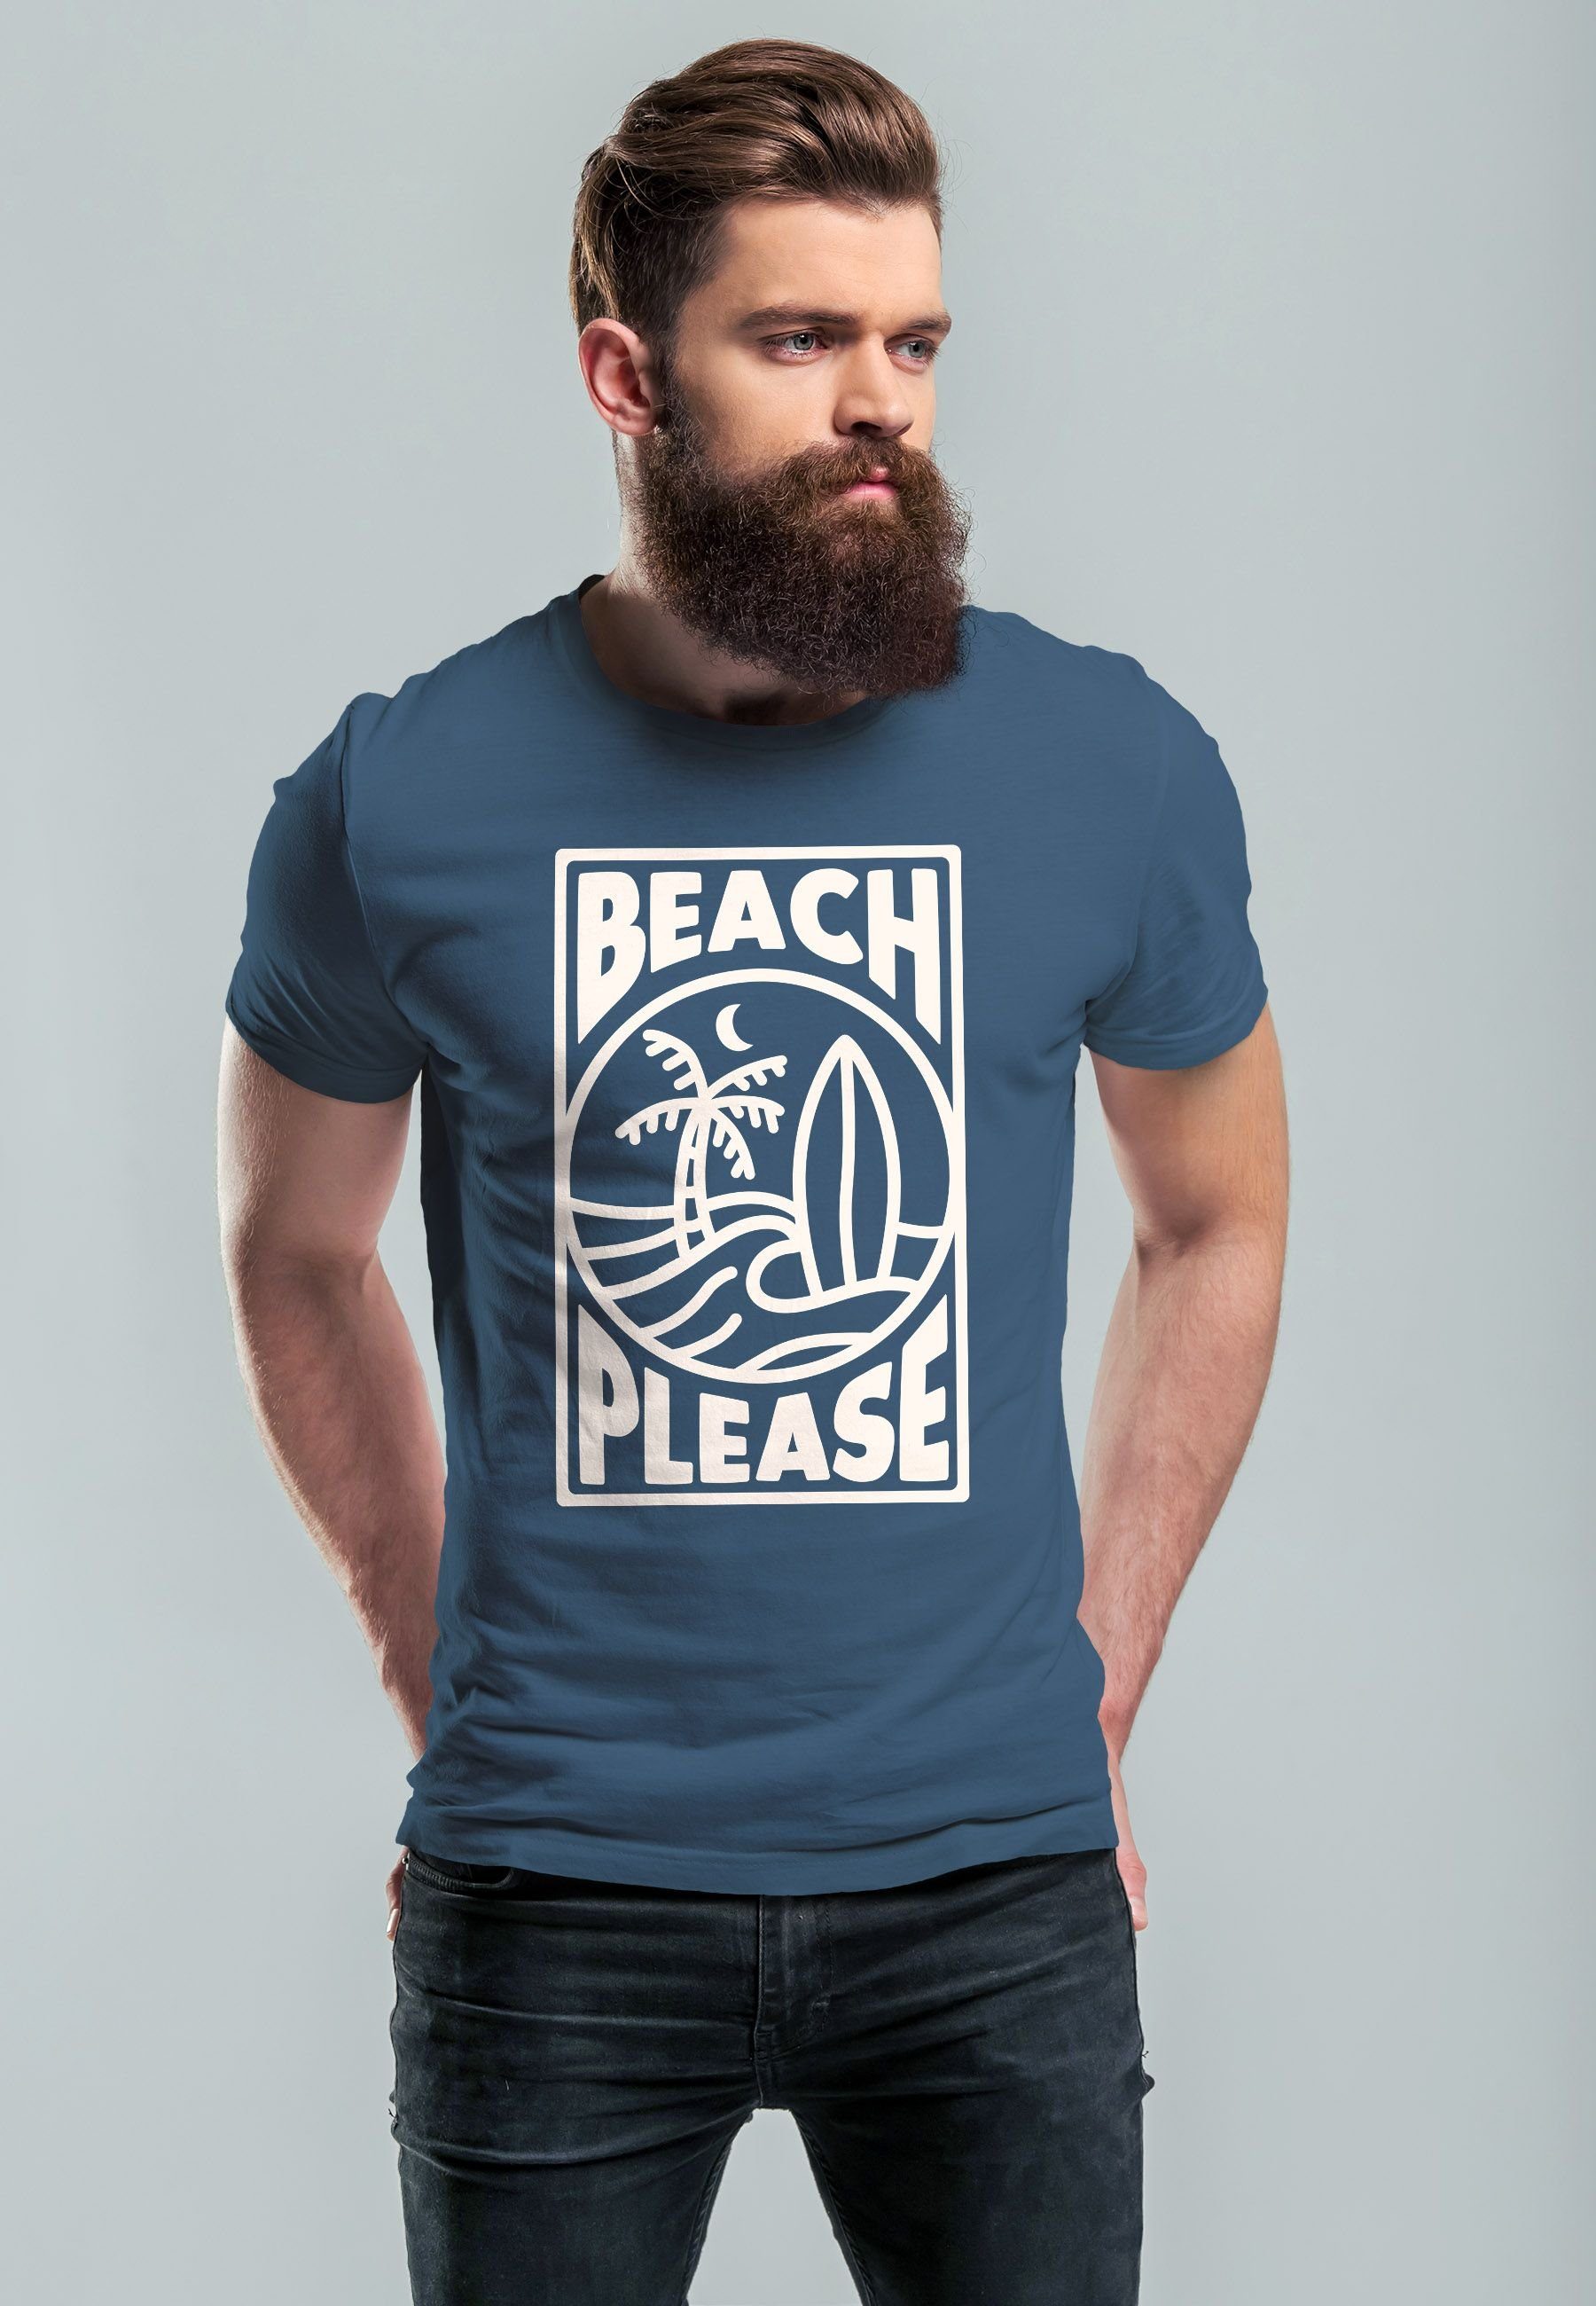 Neverless Print-Shirt Herren T-Shirt Wave Print Please Welle denim Surfboard Print Beach mit Surfing Sommer blue